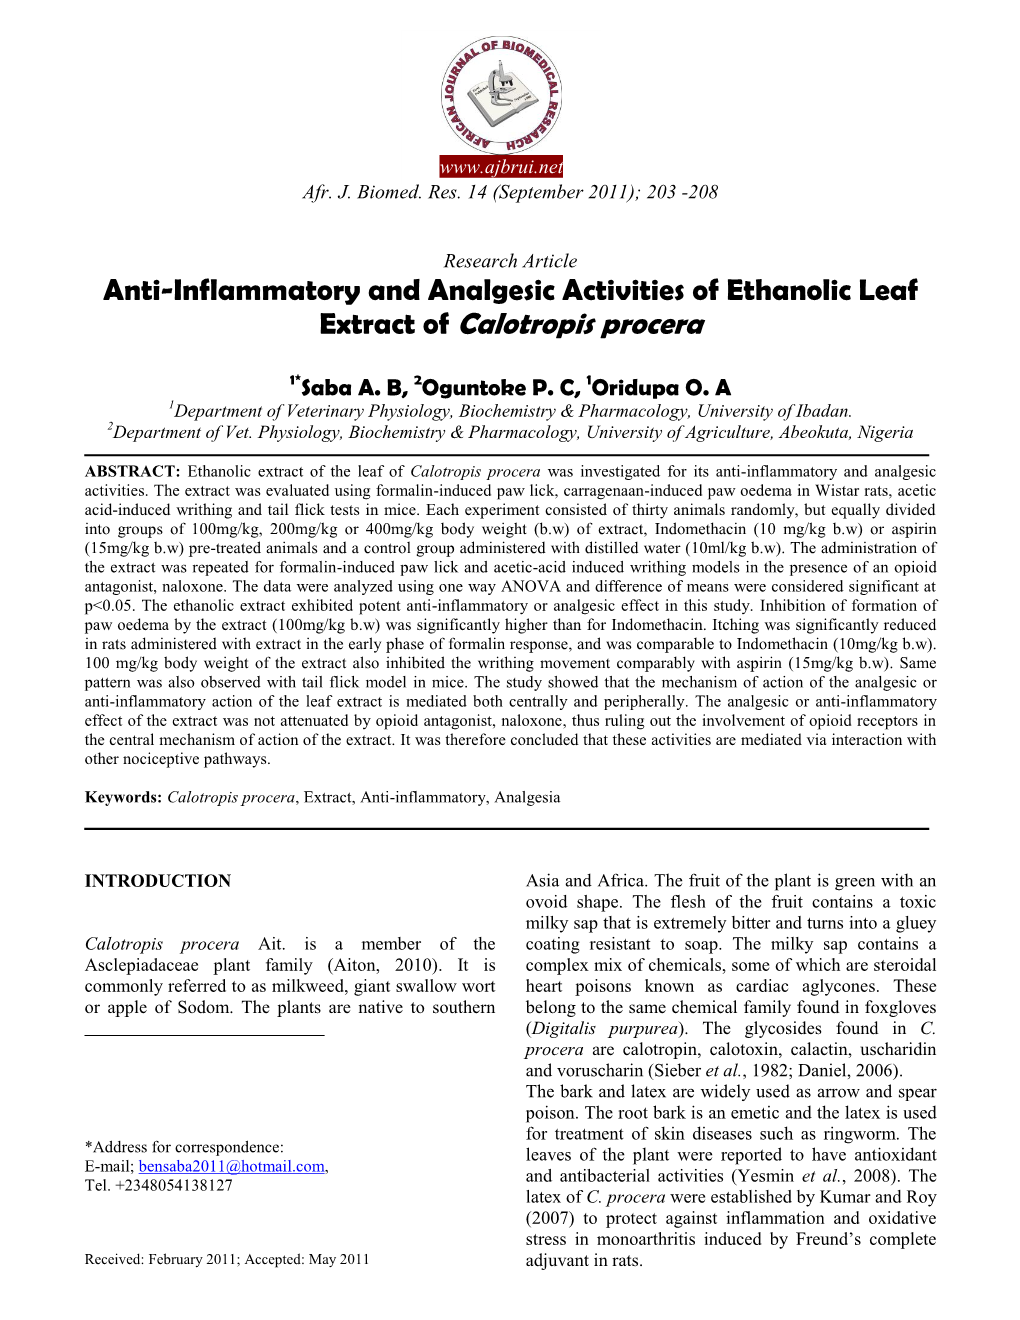 Anti-Inflammatory and Analgesic Activities of Ethanolic Leaf Extract of Calotropis Procera